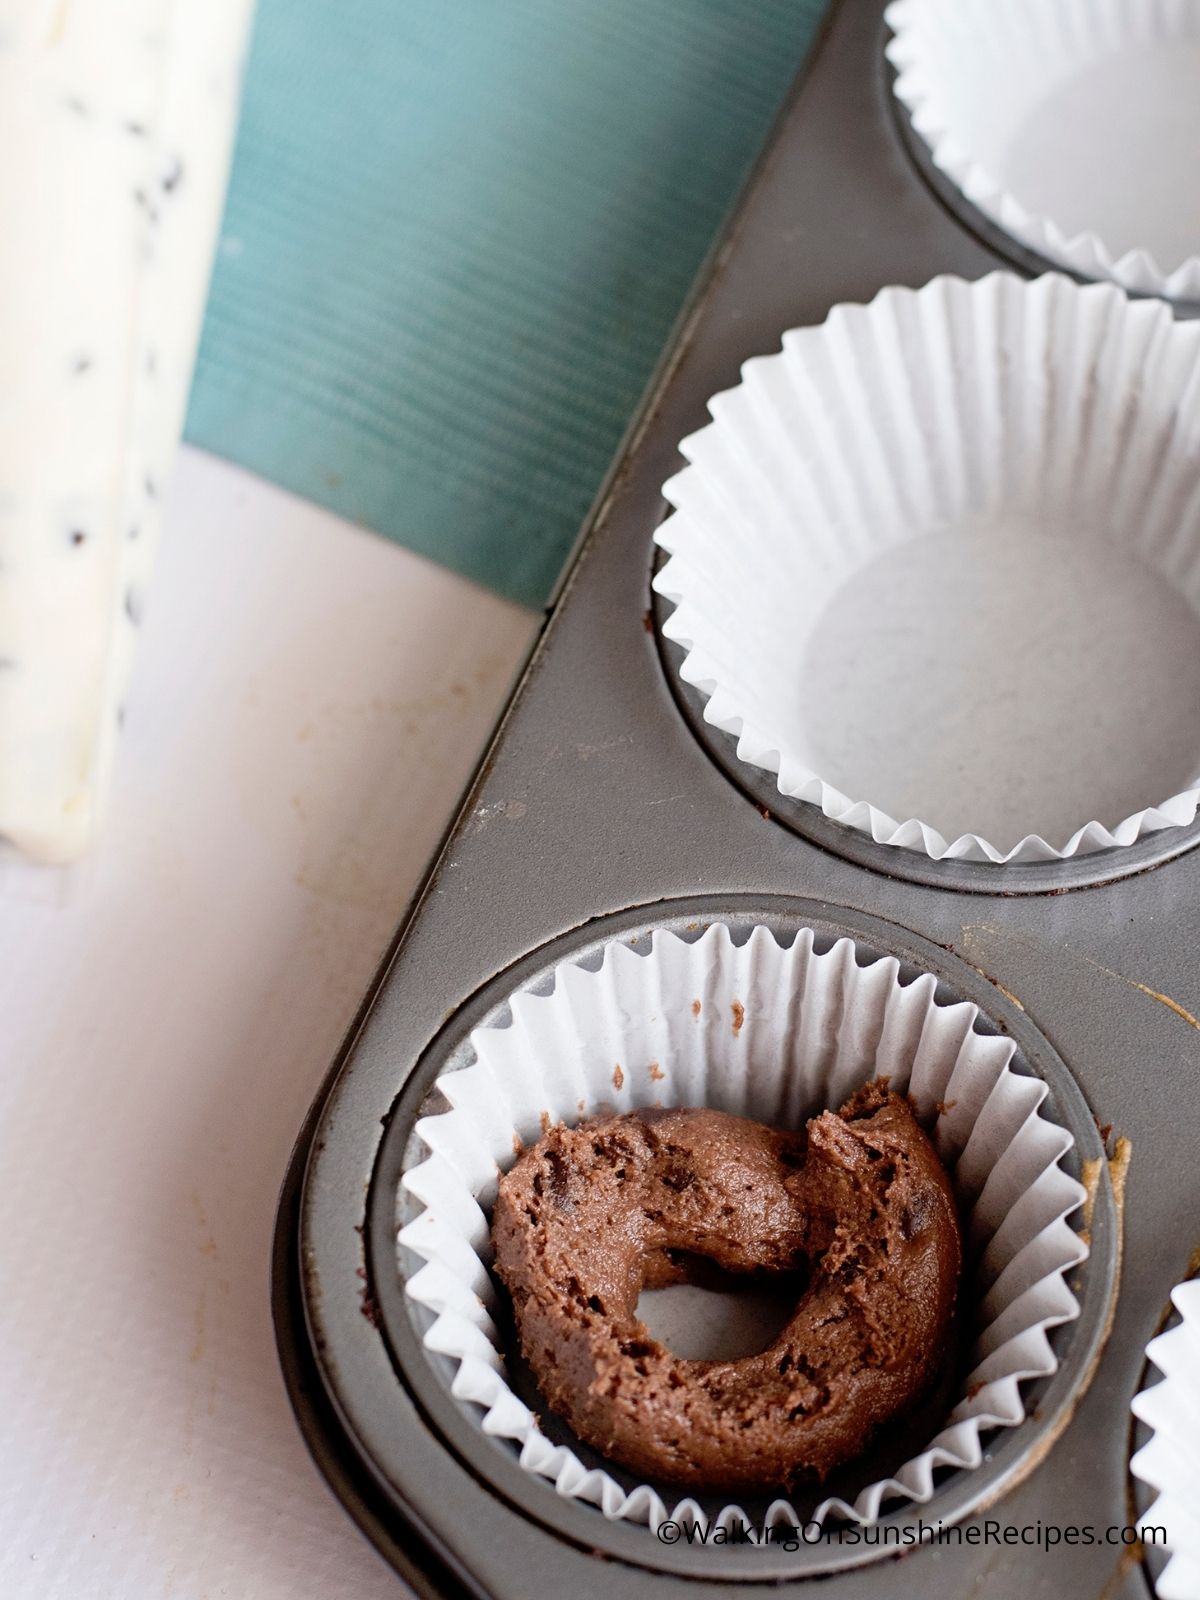 Add chocolate batter to muffin tin.